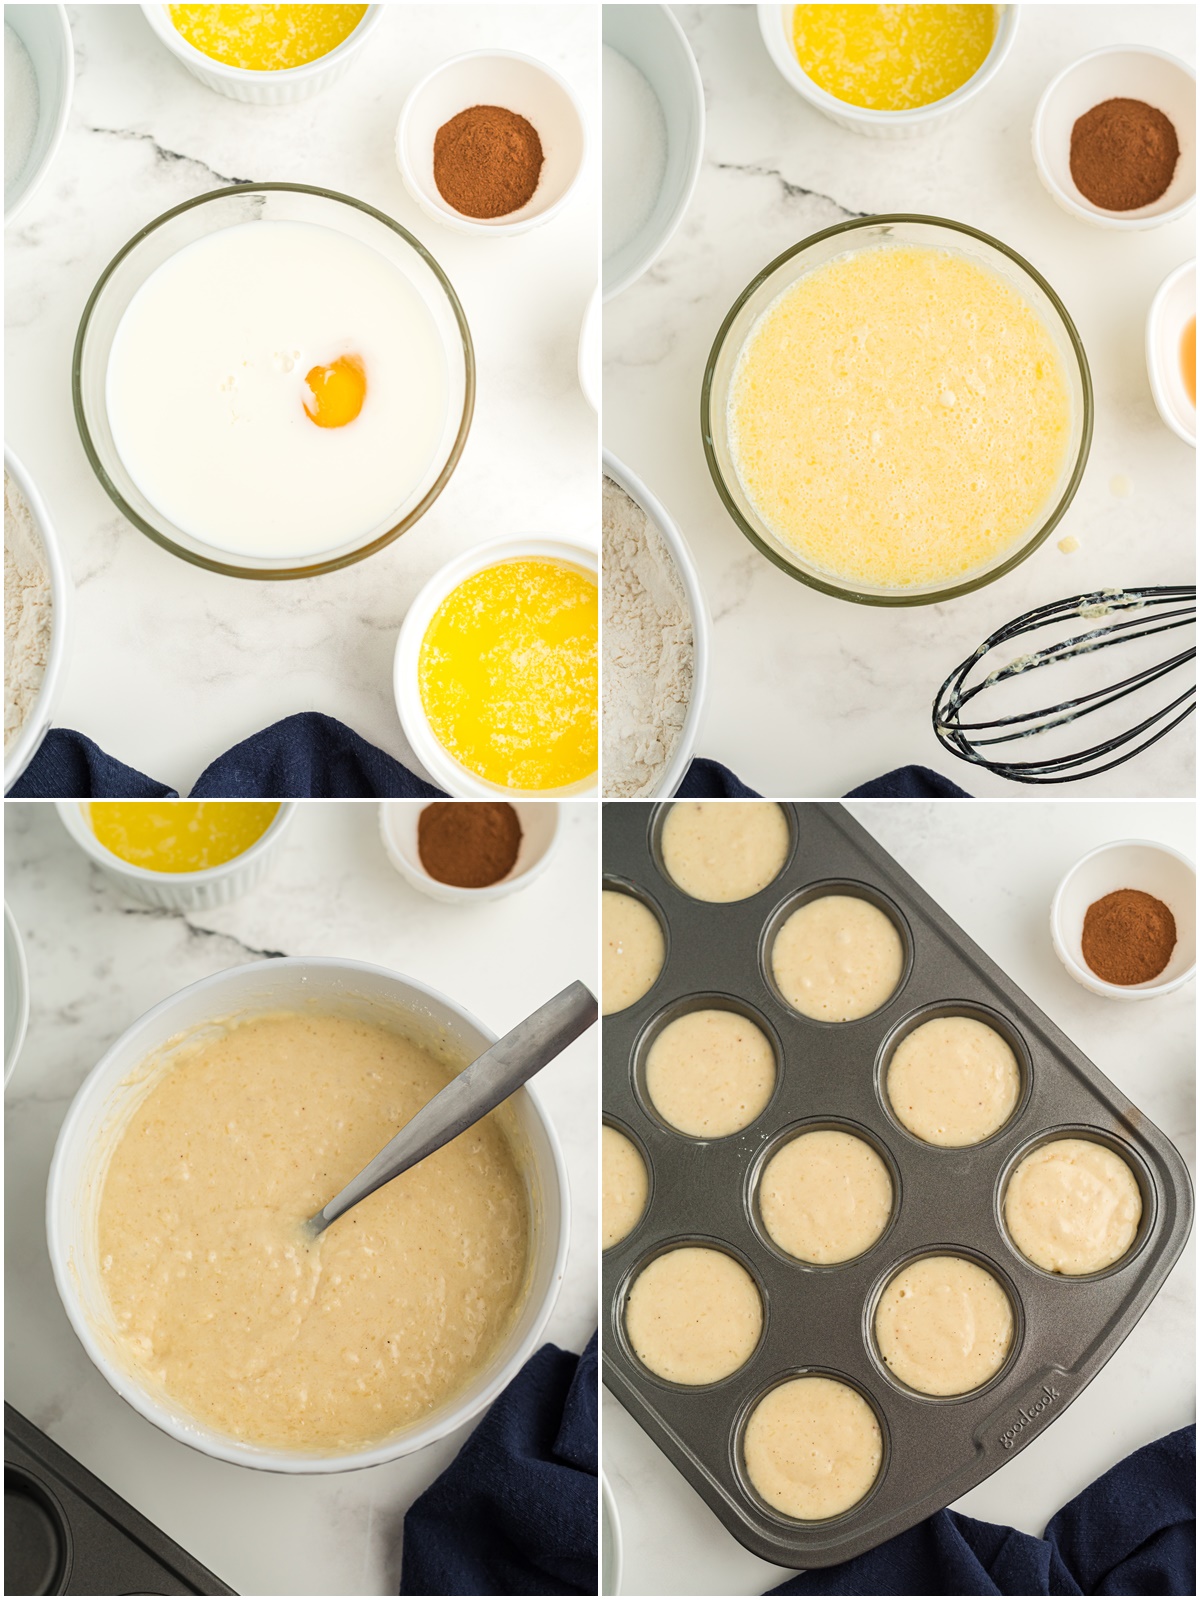 Step by step process of preparing cinnamon sugar muffins. 